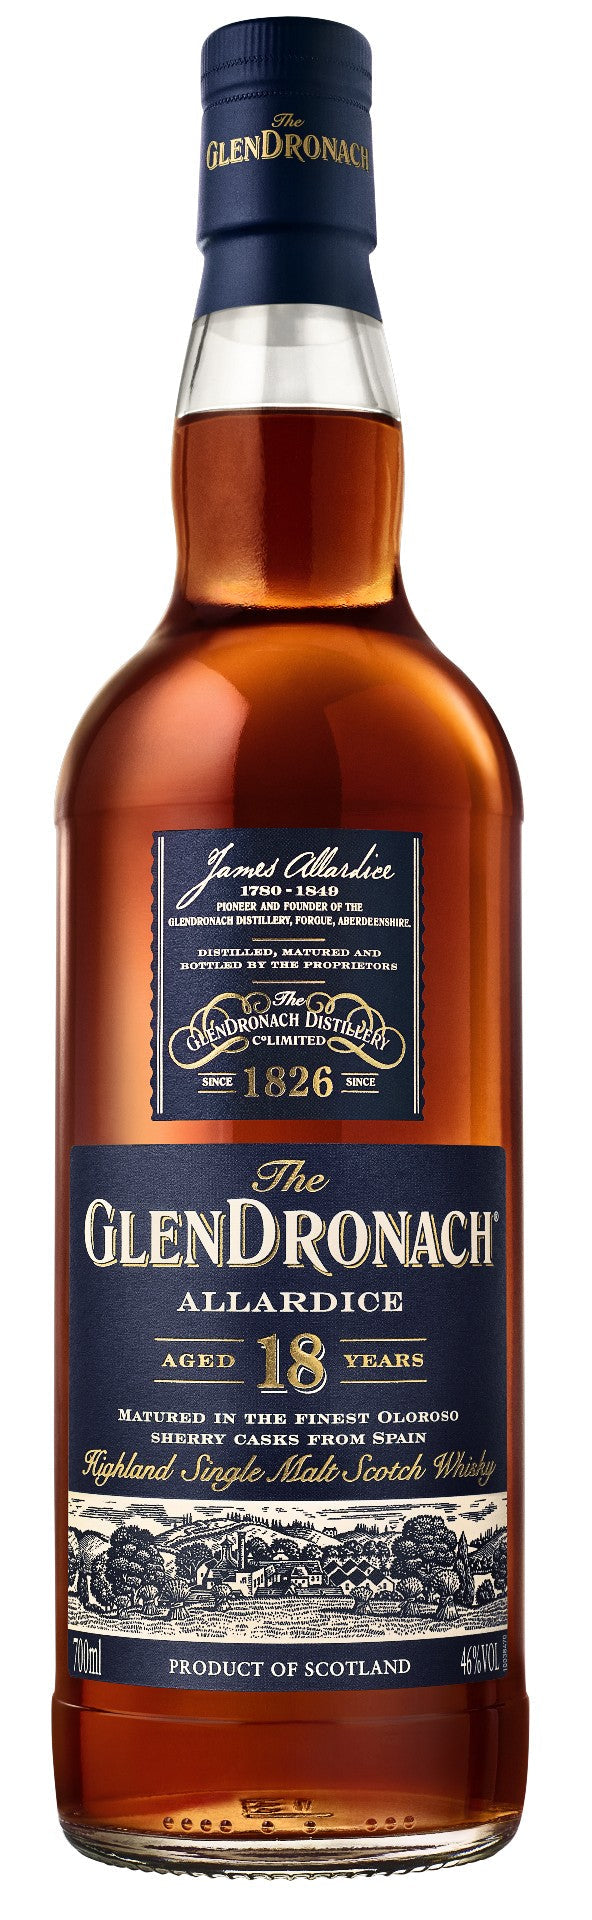 The Glendronach Allardice Aged 18 Years